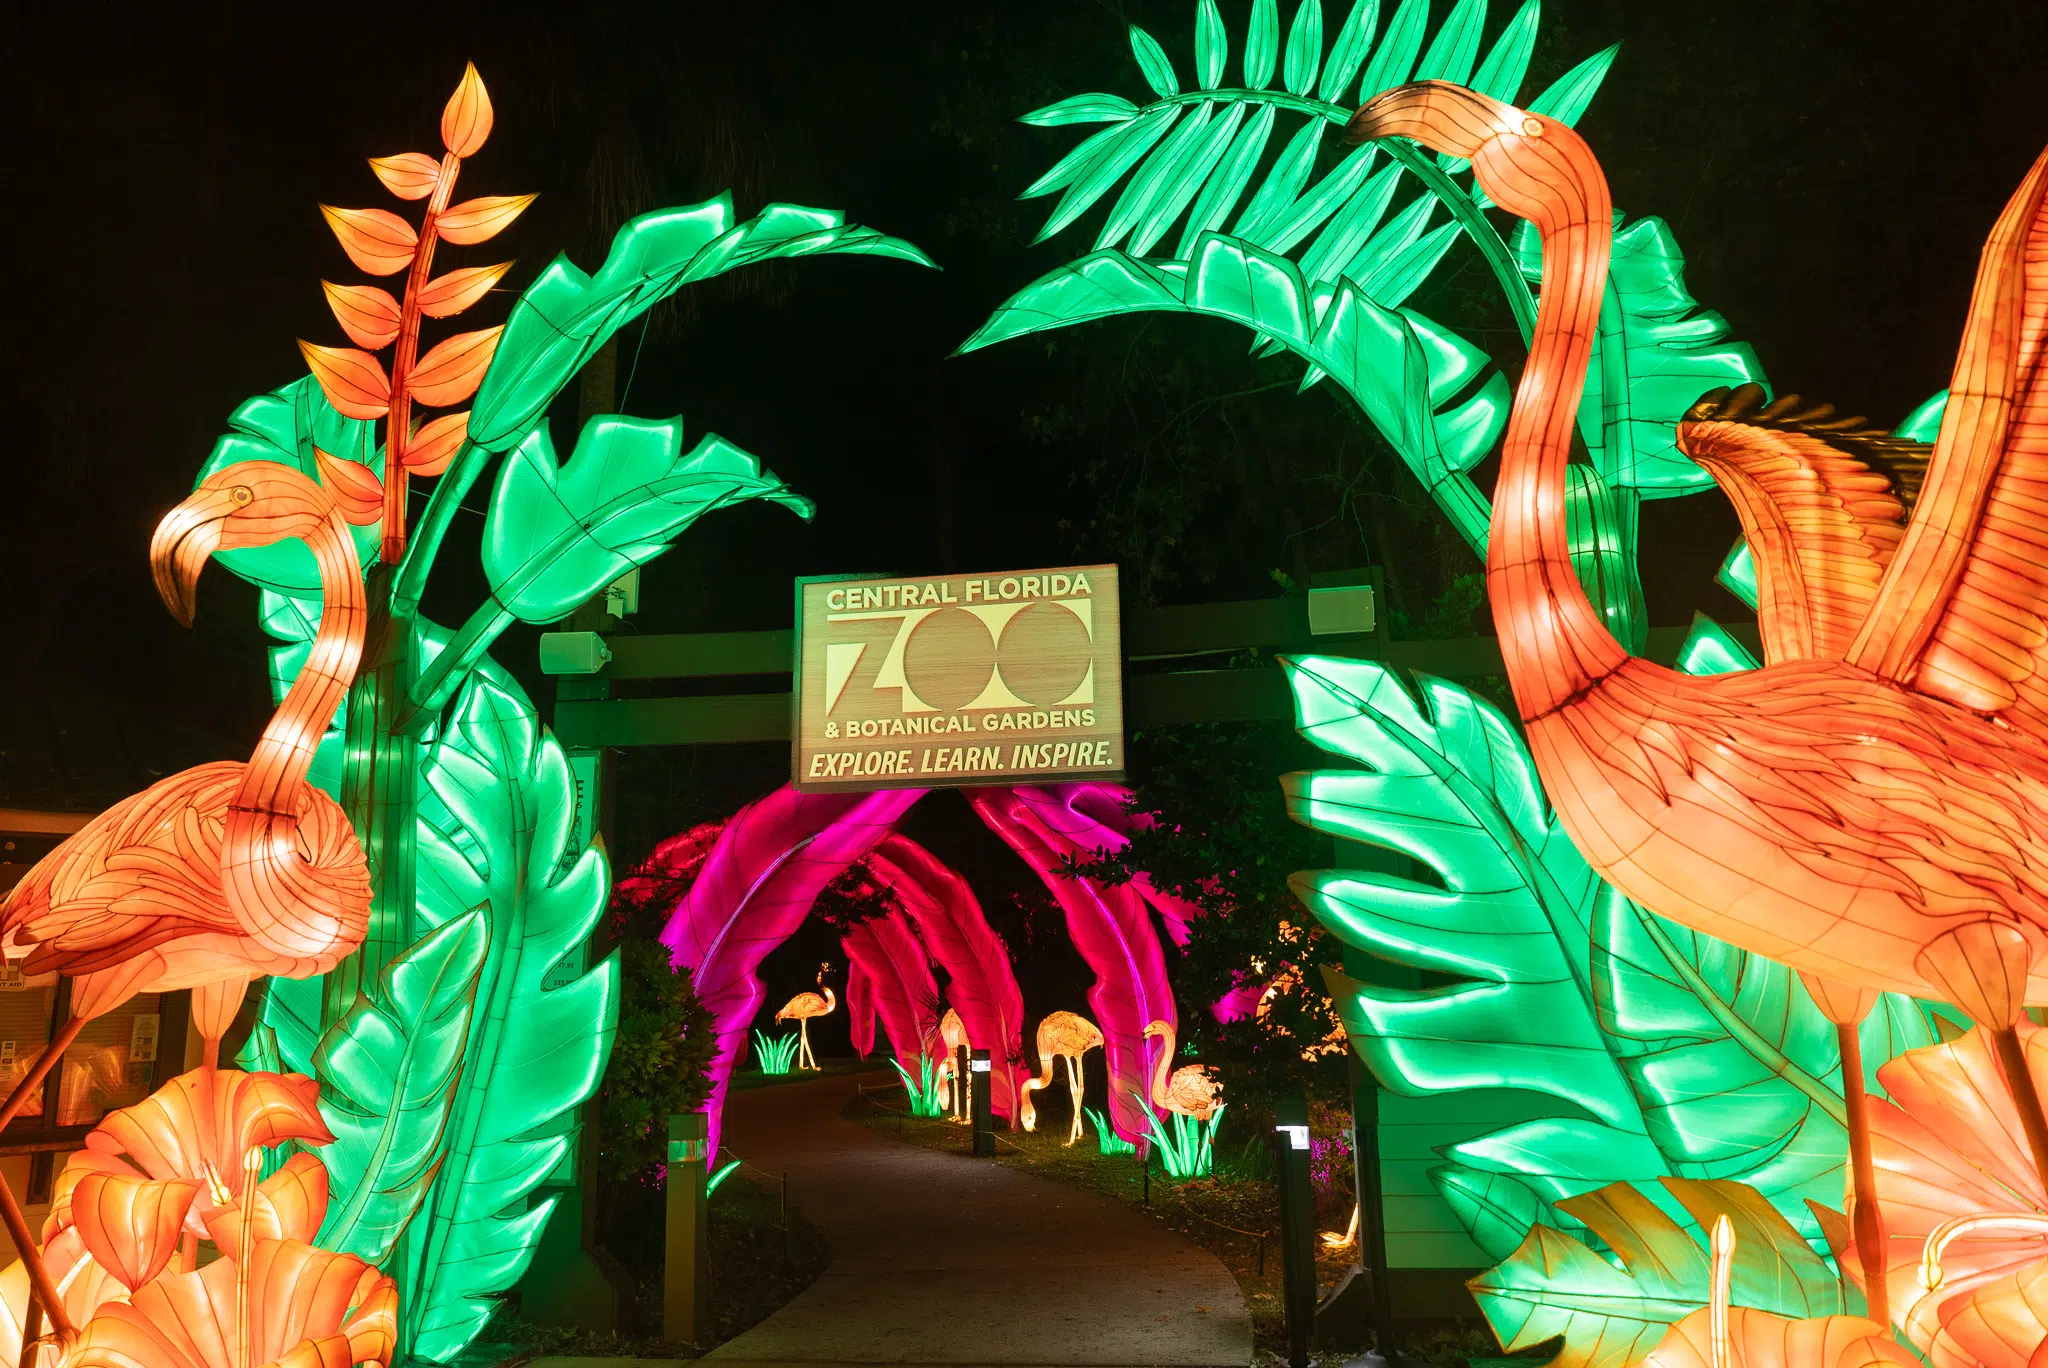 Asian Lantern Festival at Central Florida Zoo